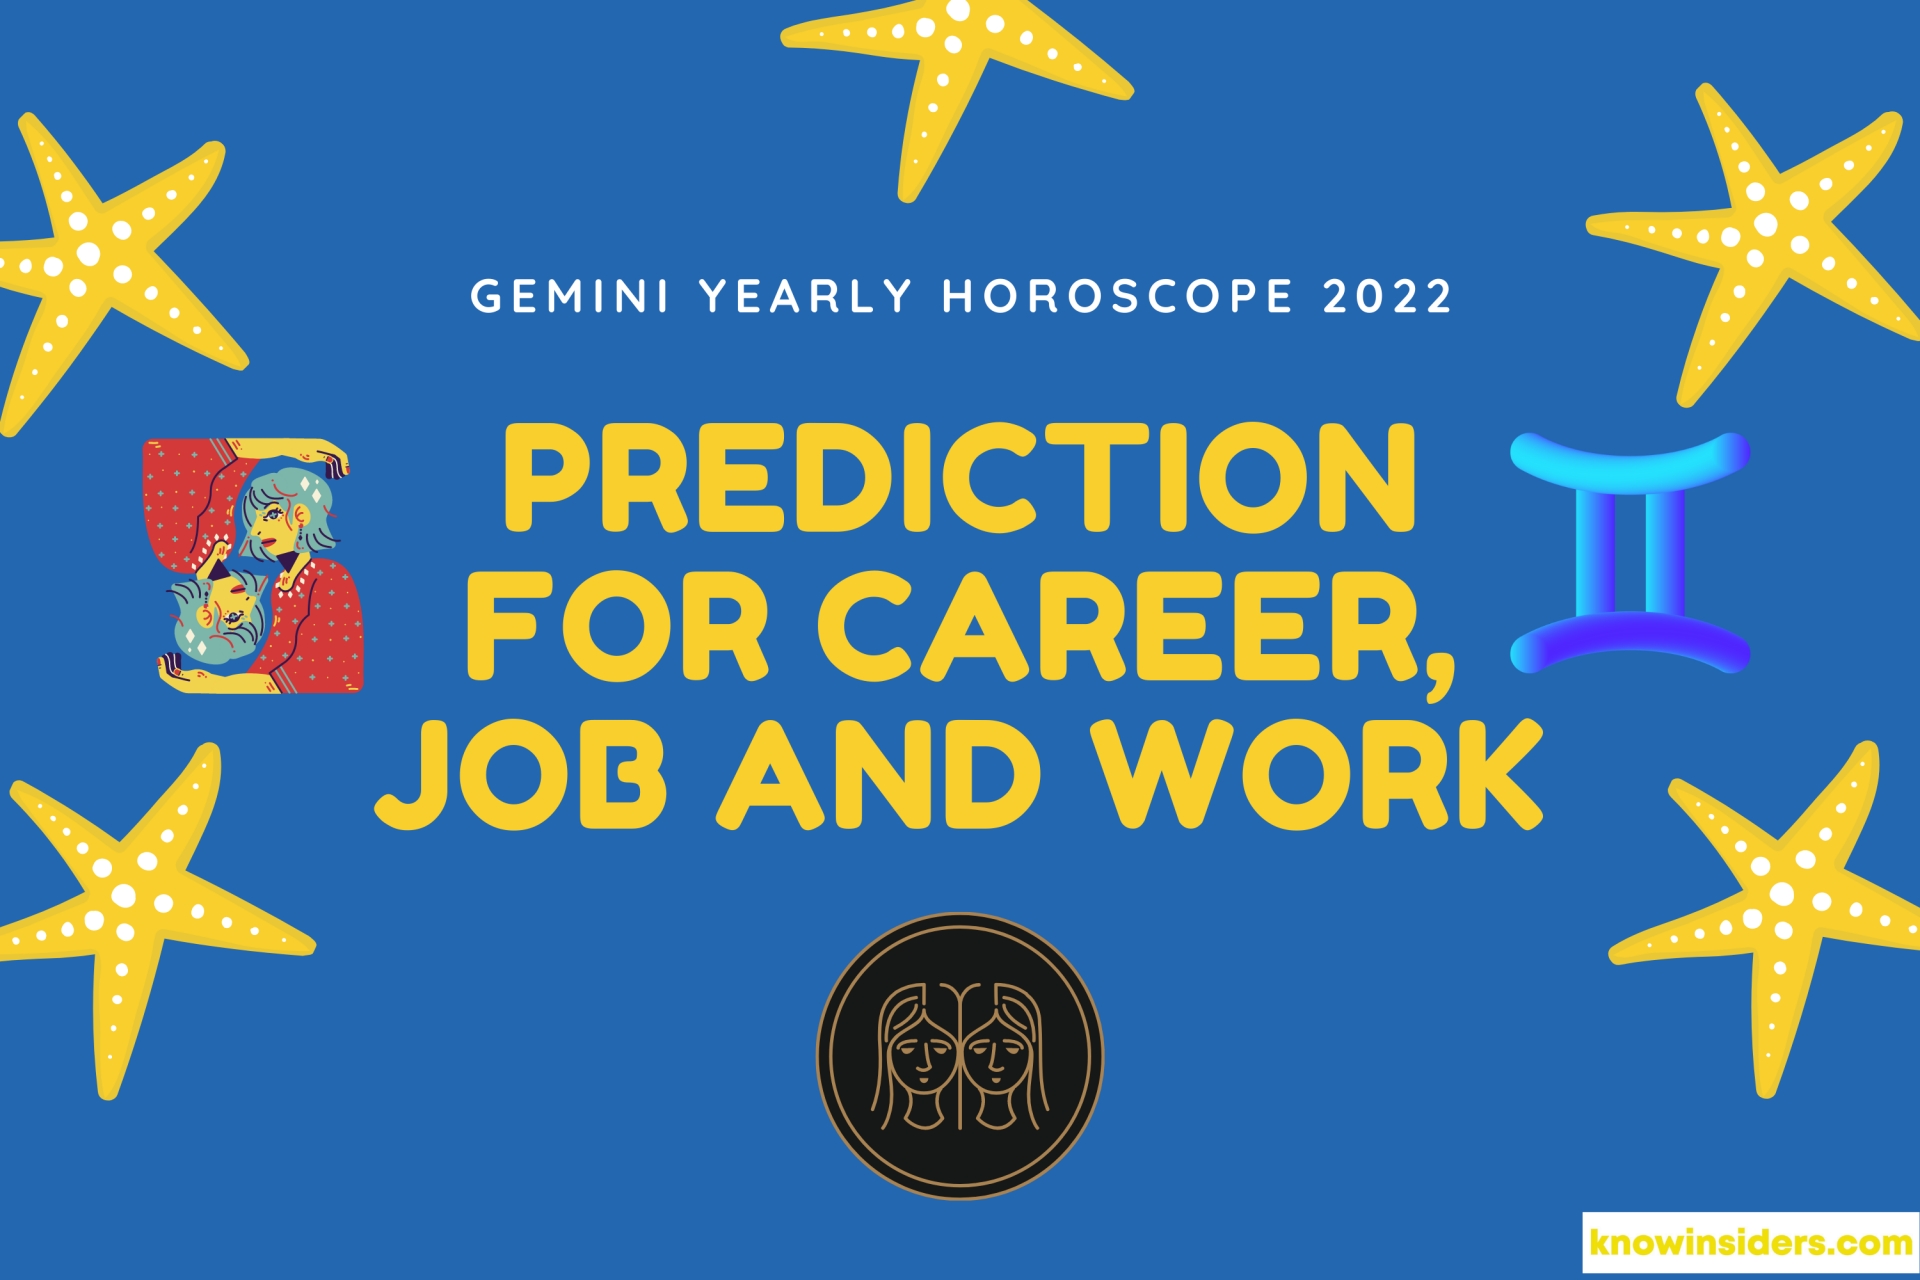 GEMINI Yearly Horoscope 2022: Prediction for Career, Job and Work